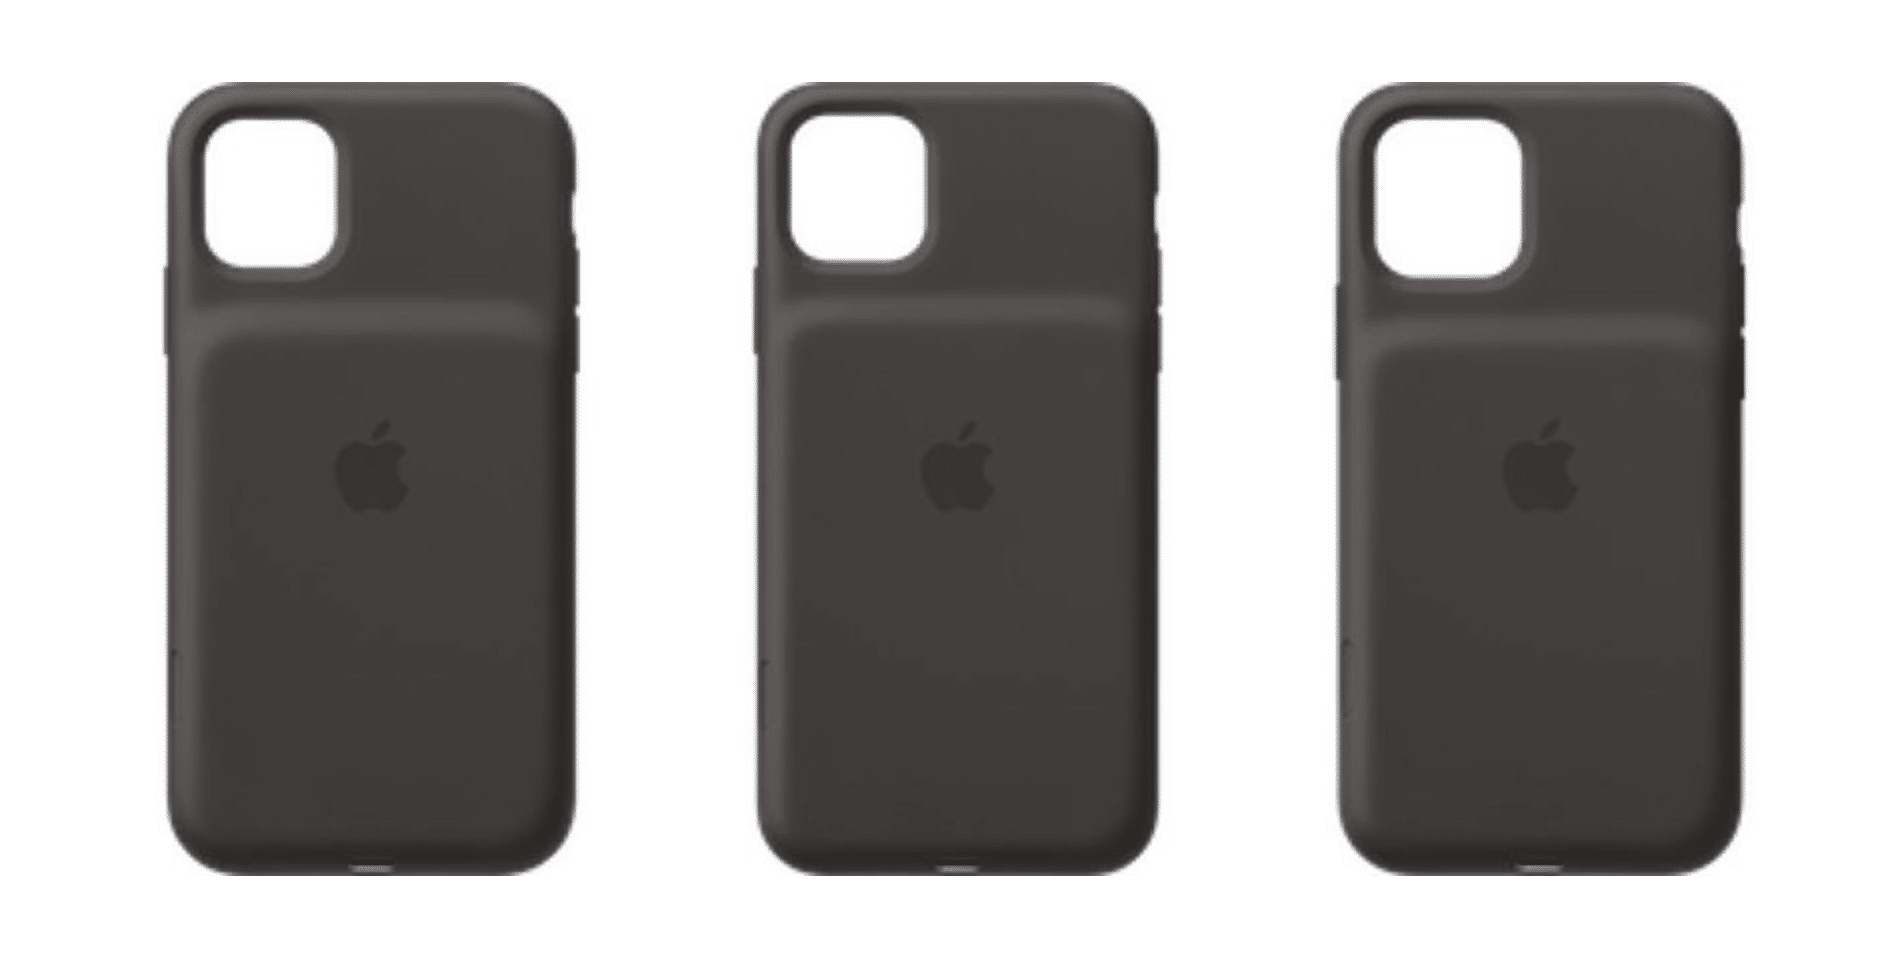 iOS 13, iOS 13.2, Smart Battery Case, iPhone 11 Pro